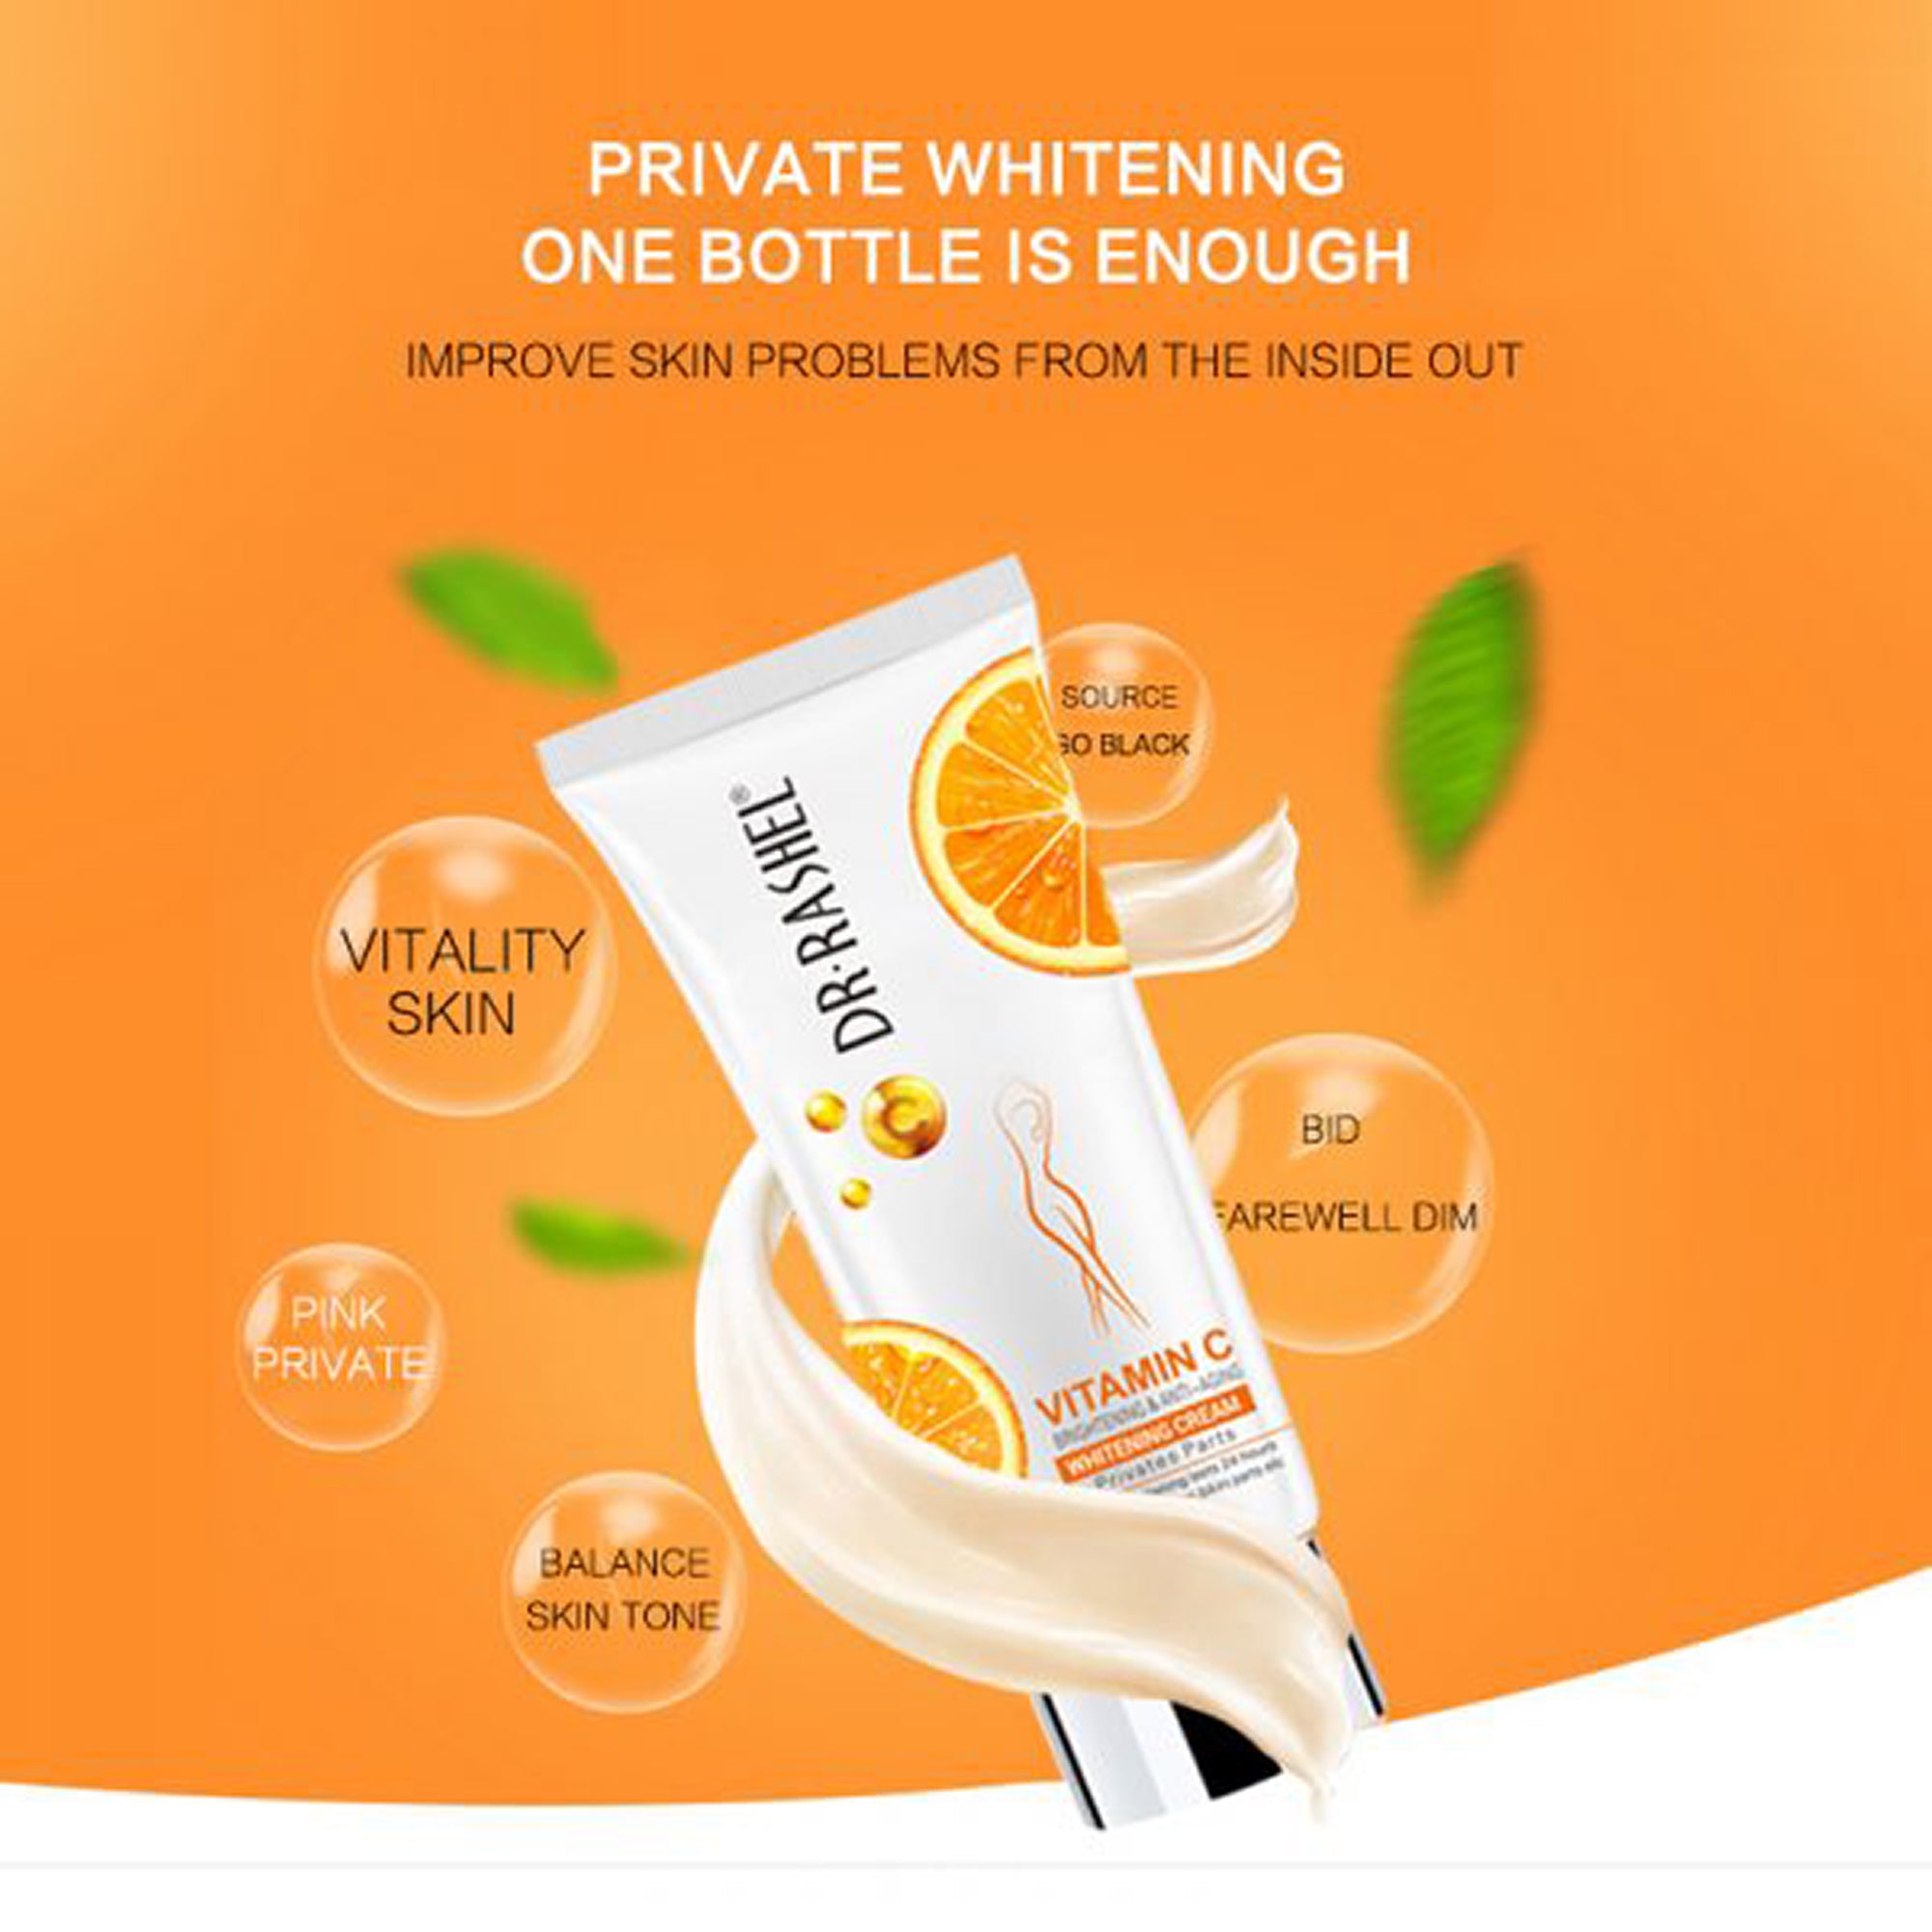 Dr-Rashel Vitamin C Private Parts Whitening Cream